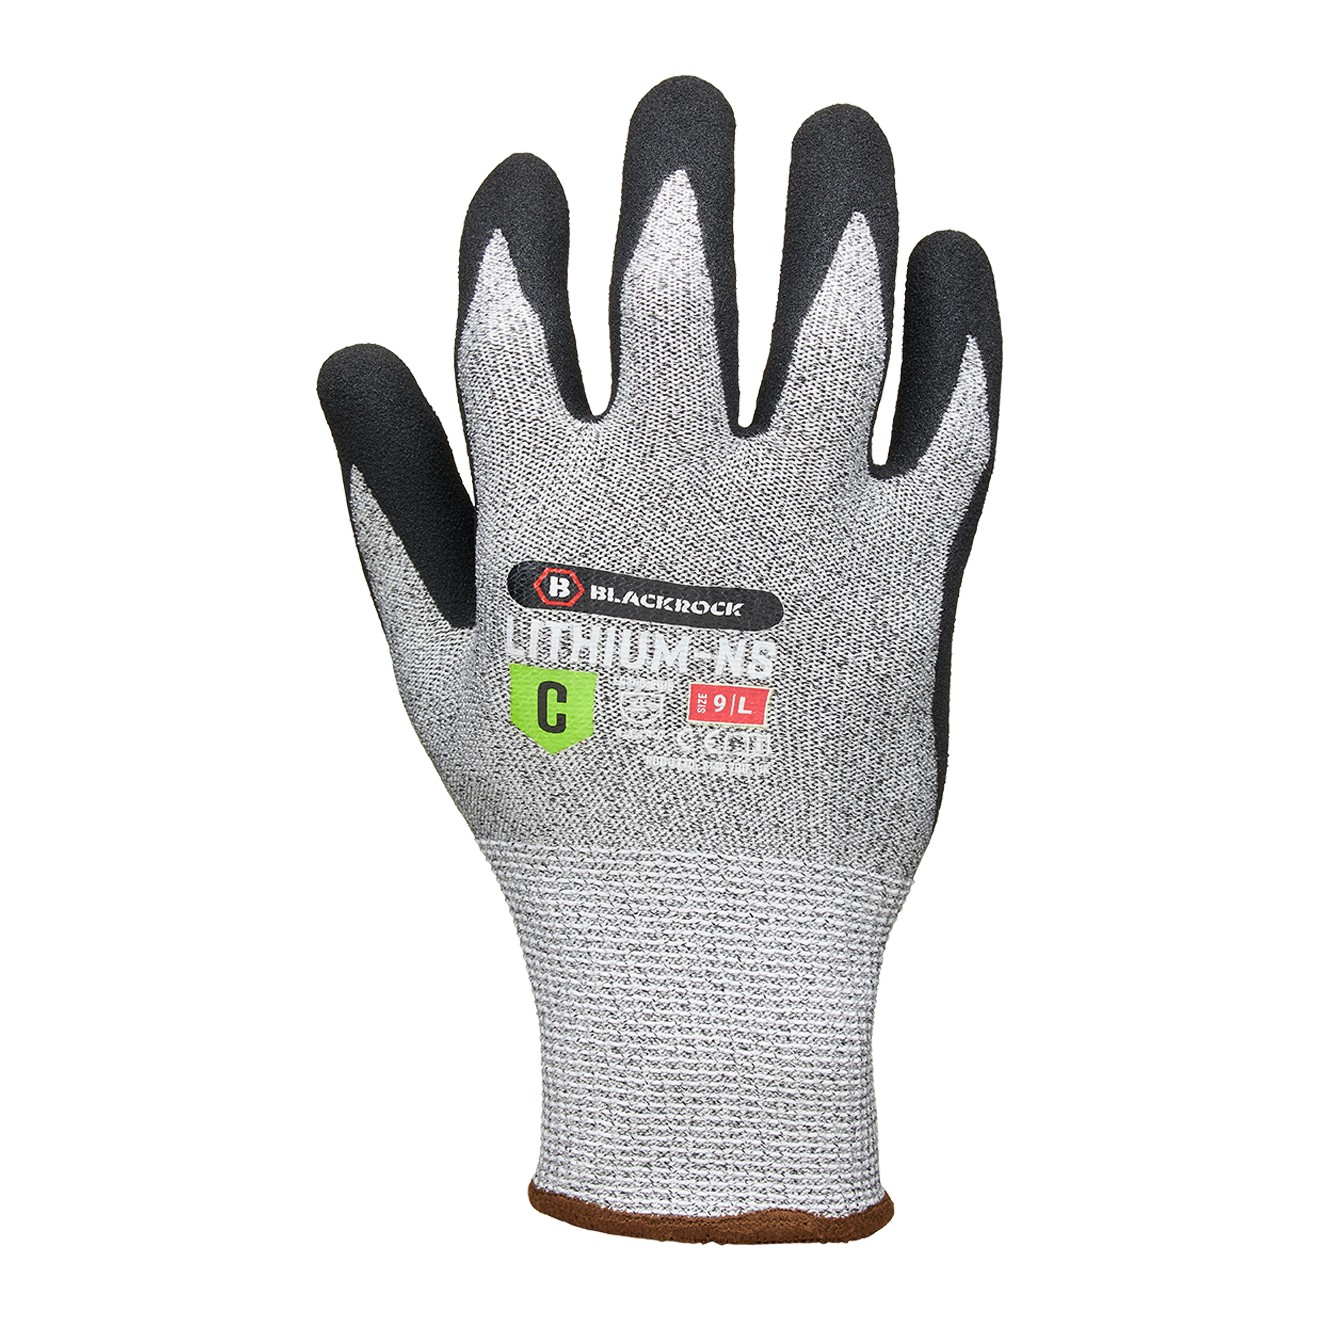 Lithium-NS Cut Resistant Glove